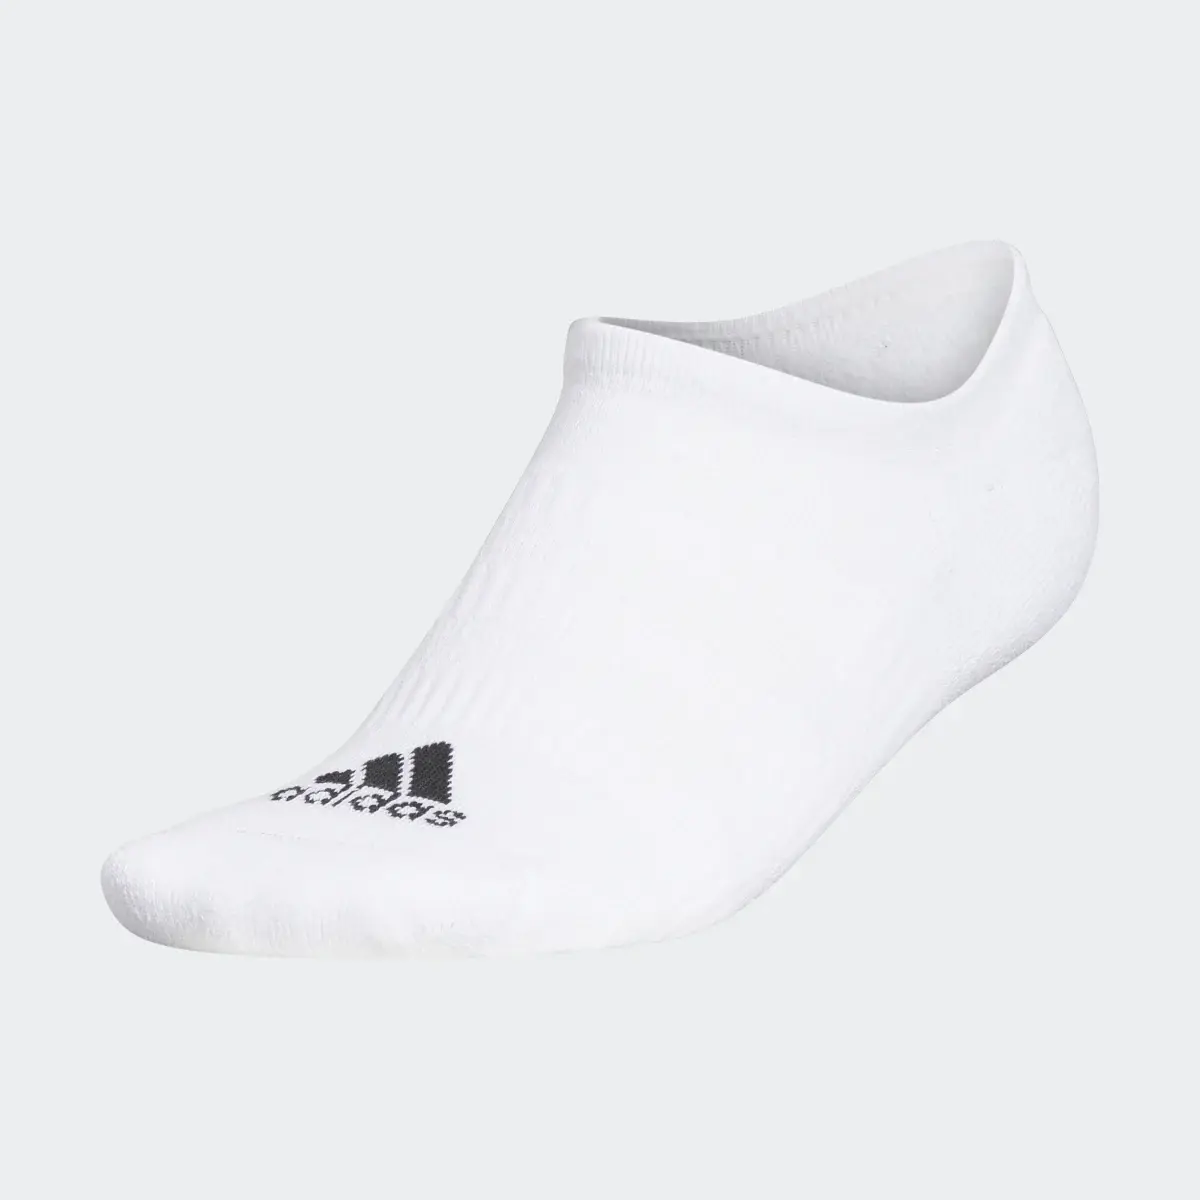 Adidas W PERF SOCK. 2